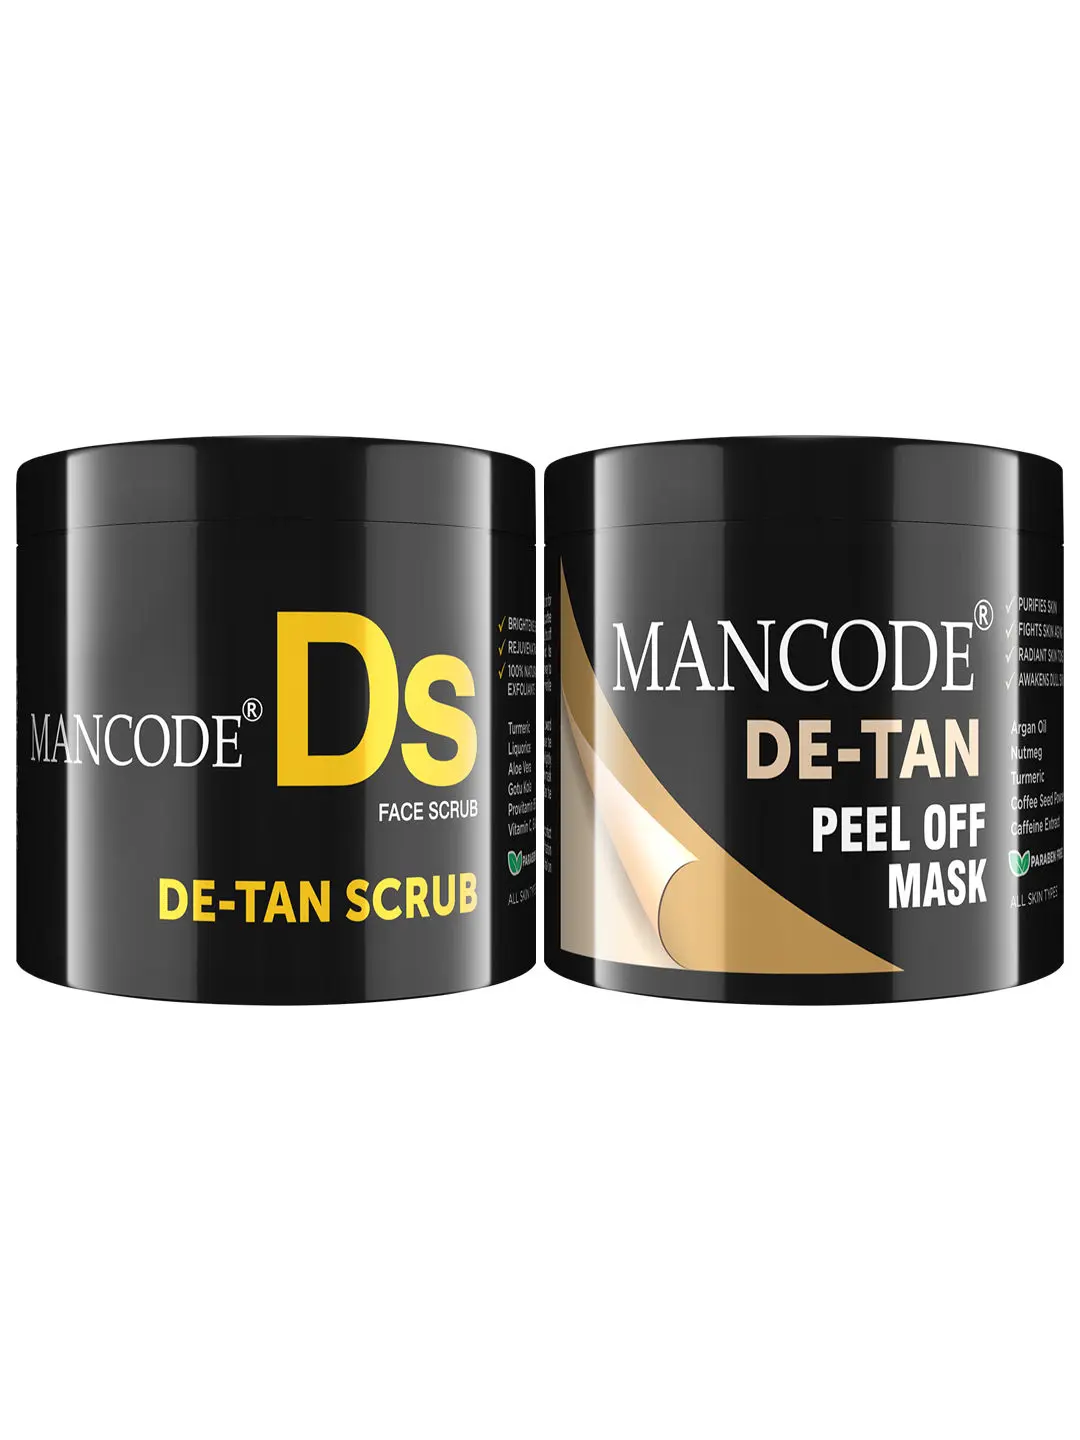 Mancode De Tan Scrub & De tan peel off mask, 100gm Each (Pack of 2)